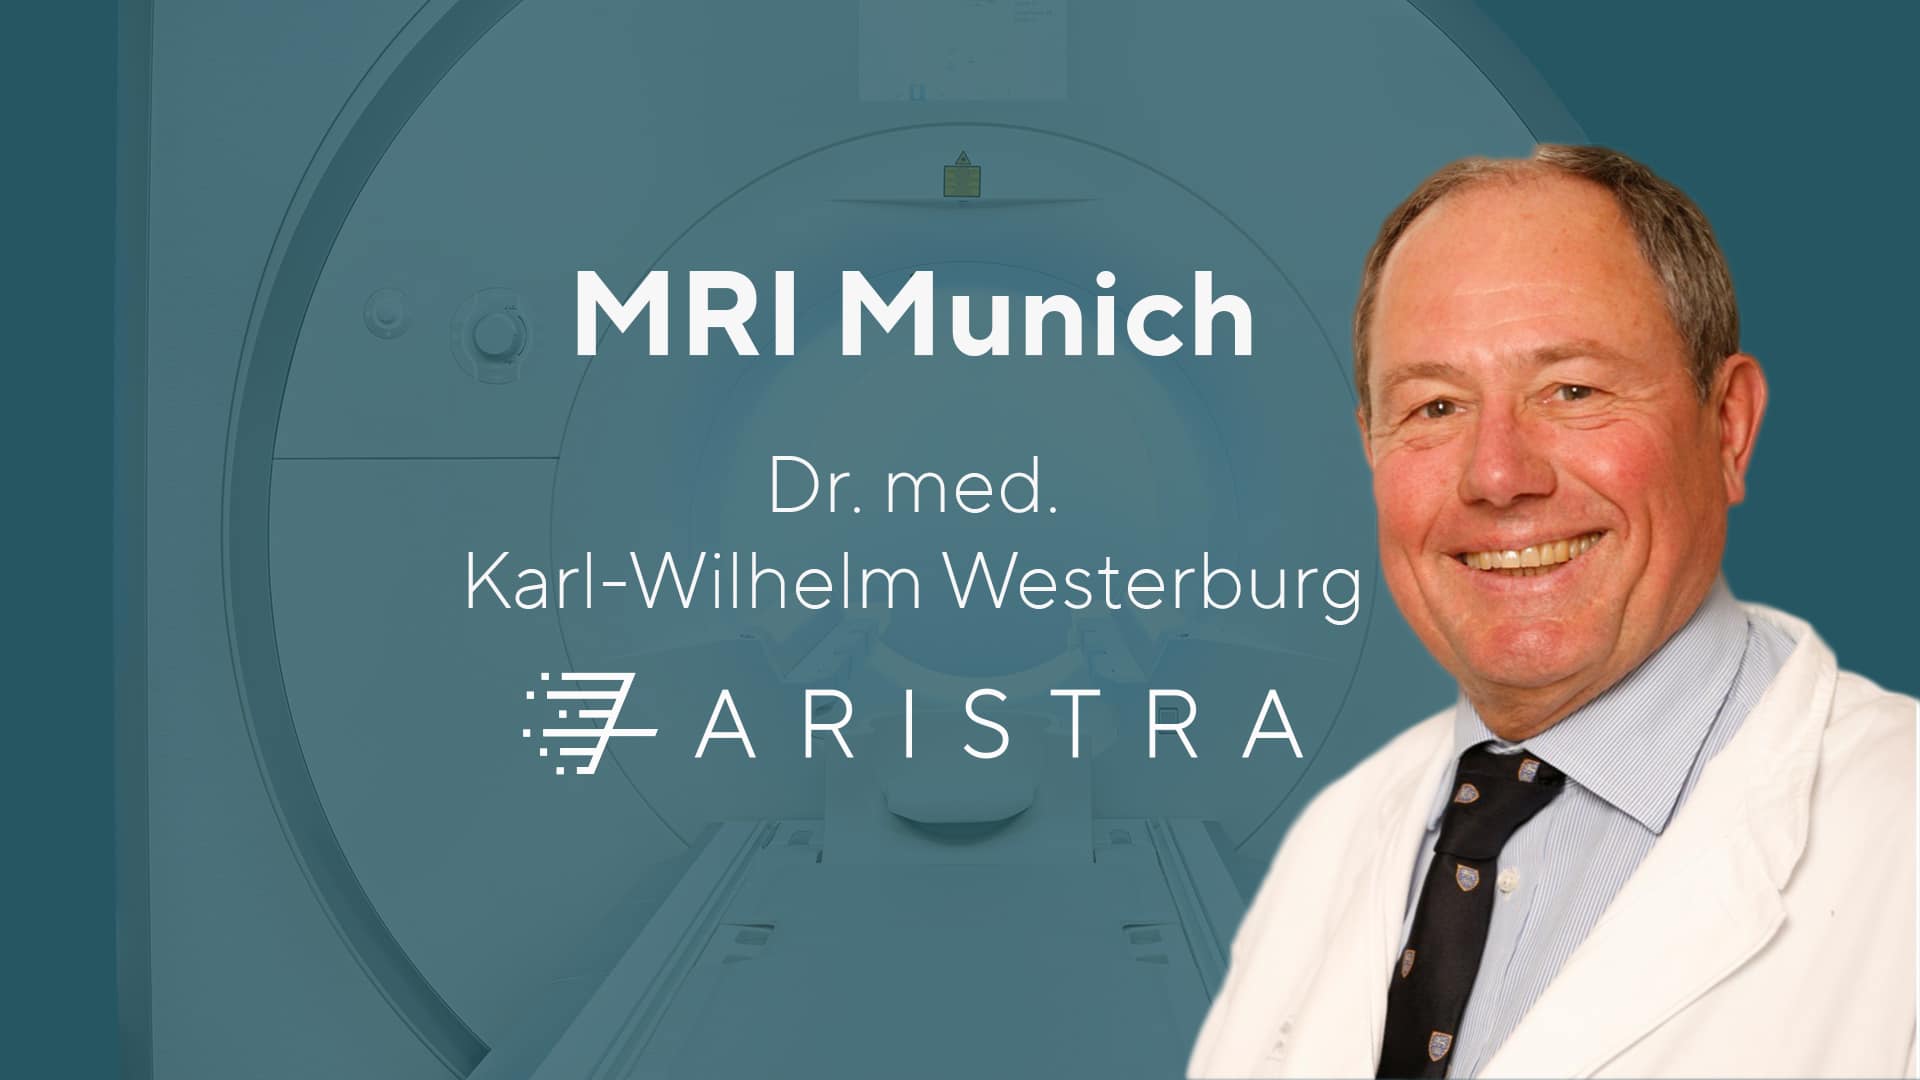 ARISTRA MRI Munich, Private practice Dr Karl-Wilhelm Westerburg